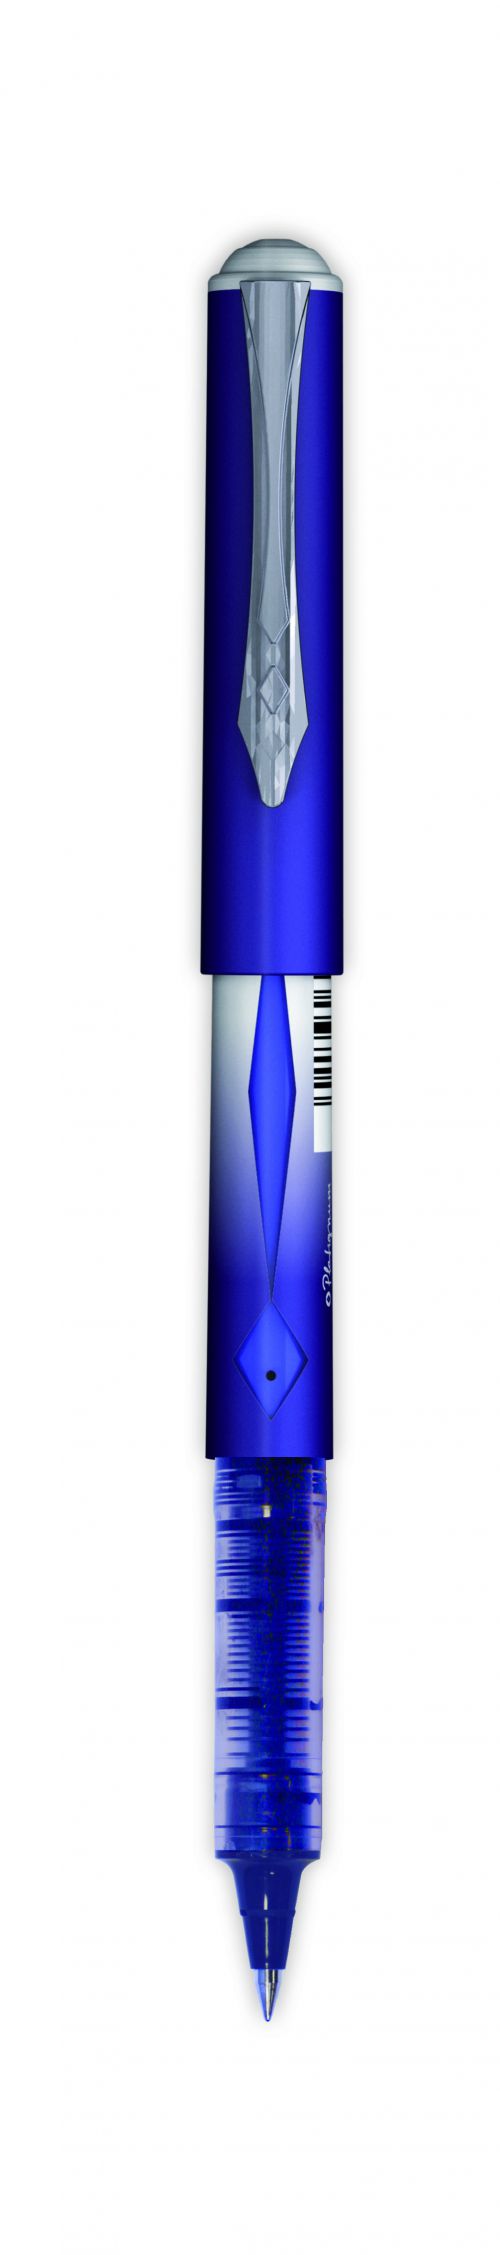 Snopake Tixx Rollerball Pen Cone Point Medium 0.5mm Blue 50457 [Pack 12]